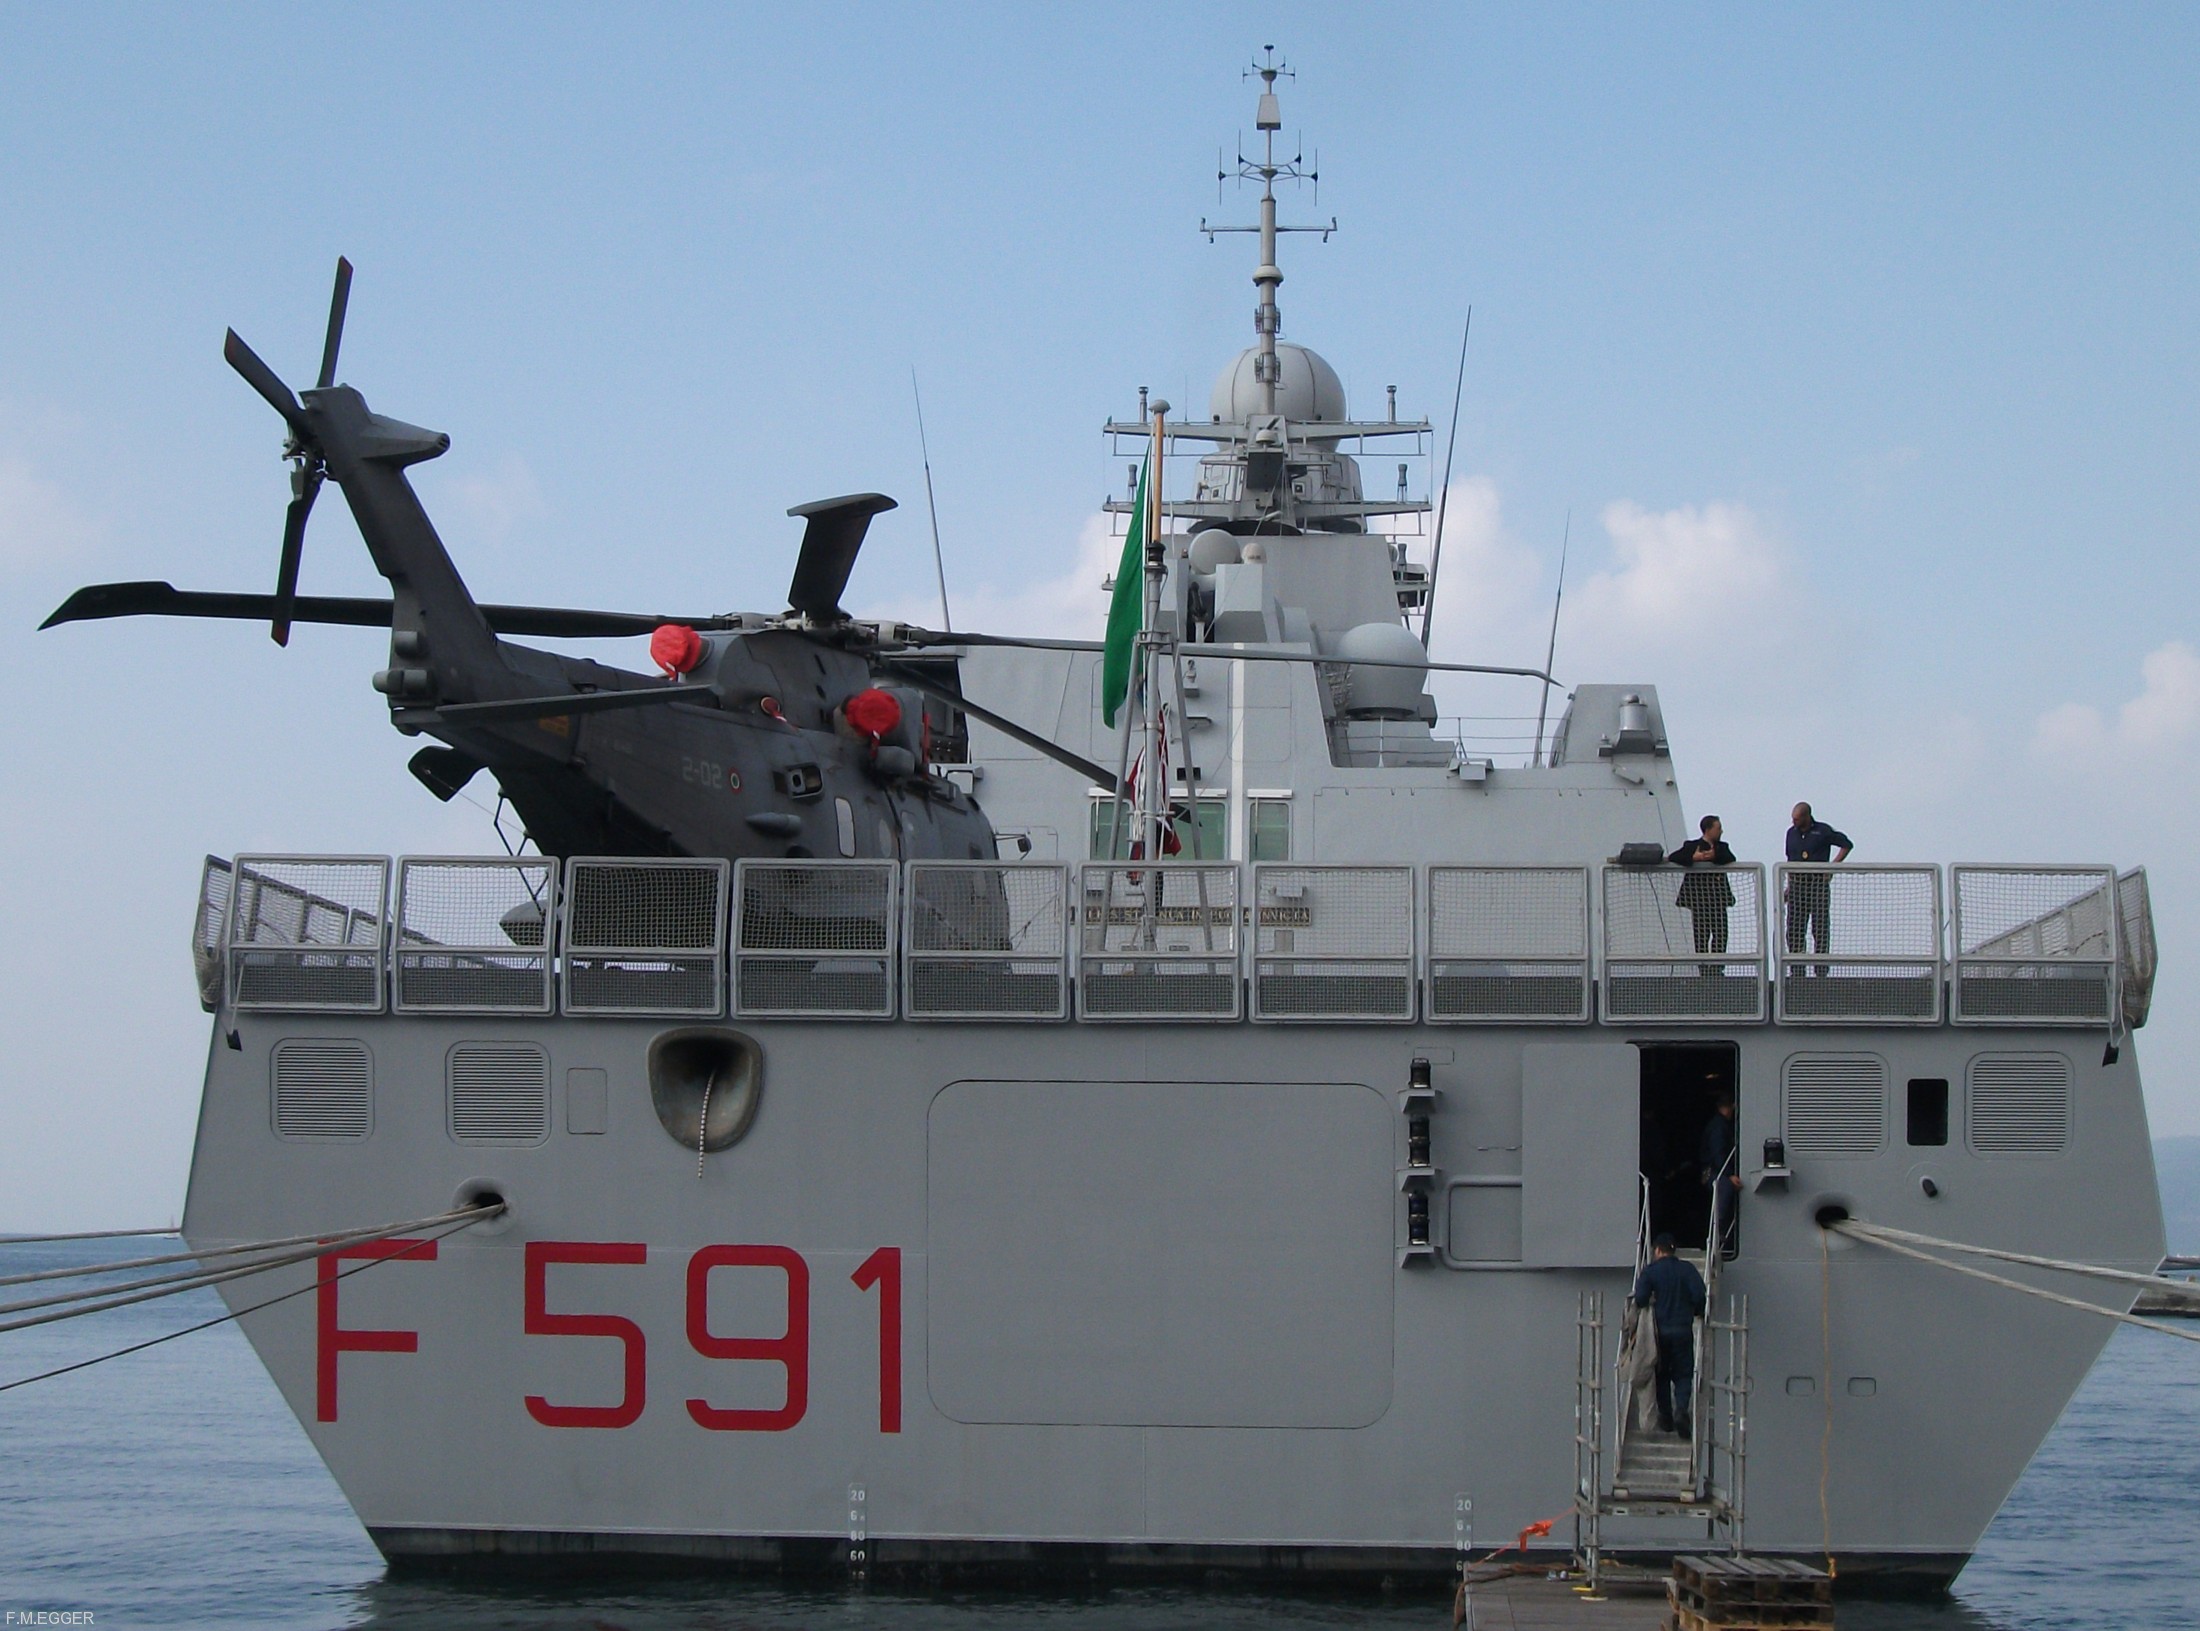 f-591 virginio fasan fremm bergamini class frigate italian navy marine militare 16